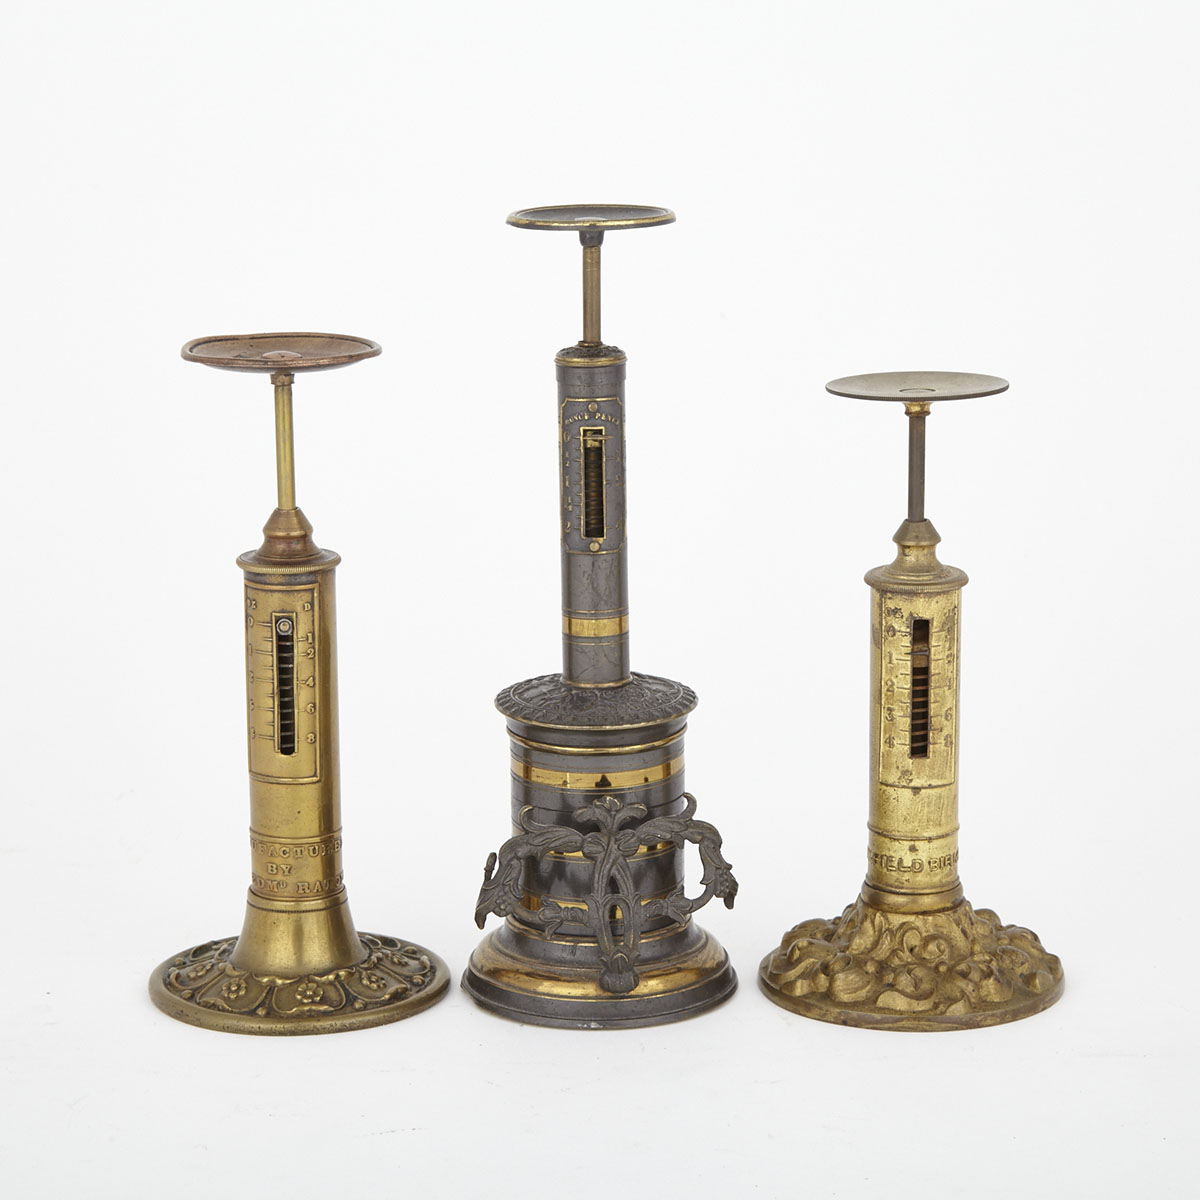 Three Victorian Pillar Type Postal Scales, 19th century